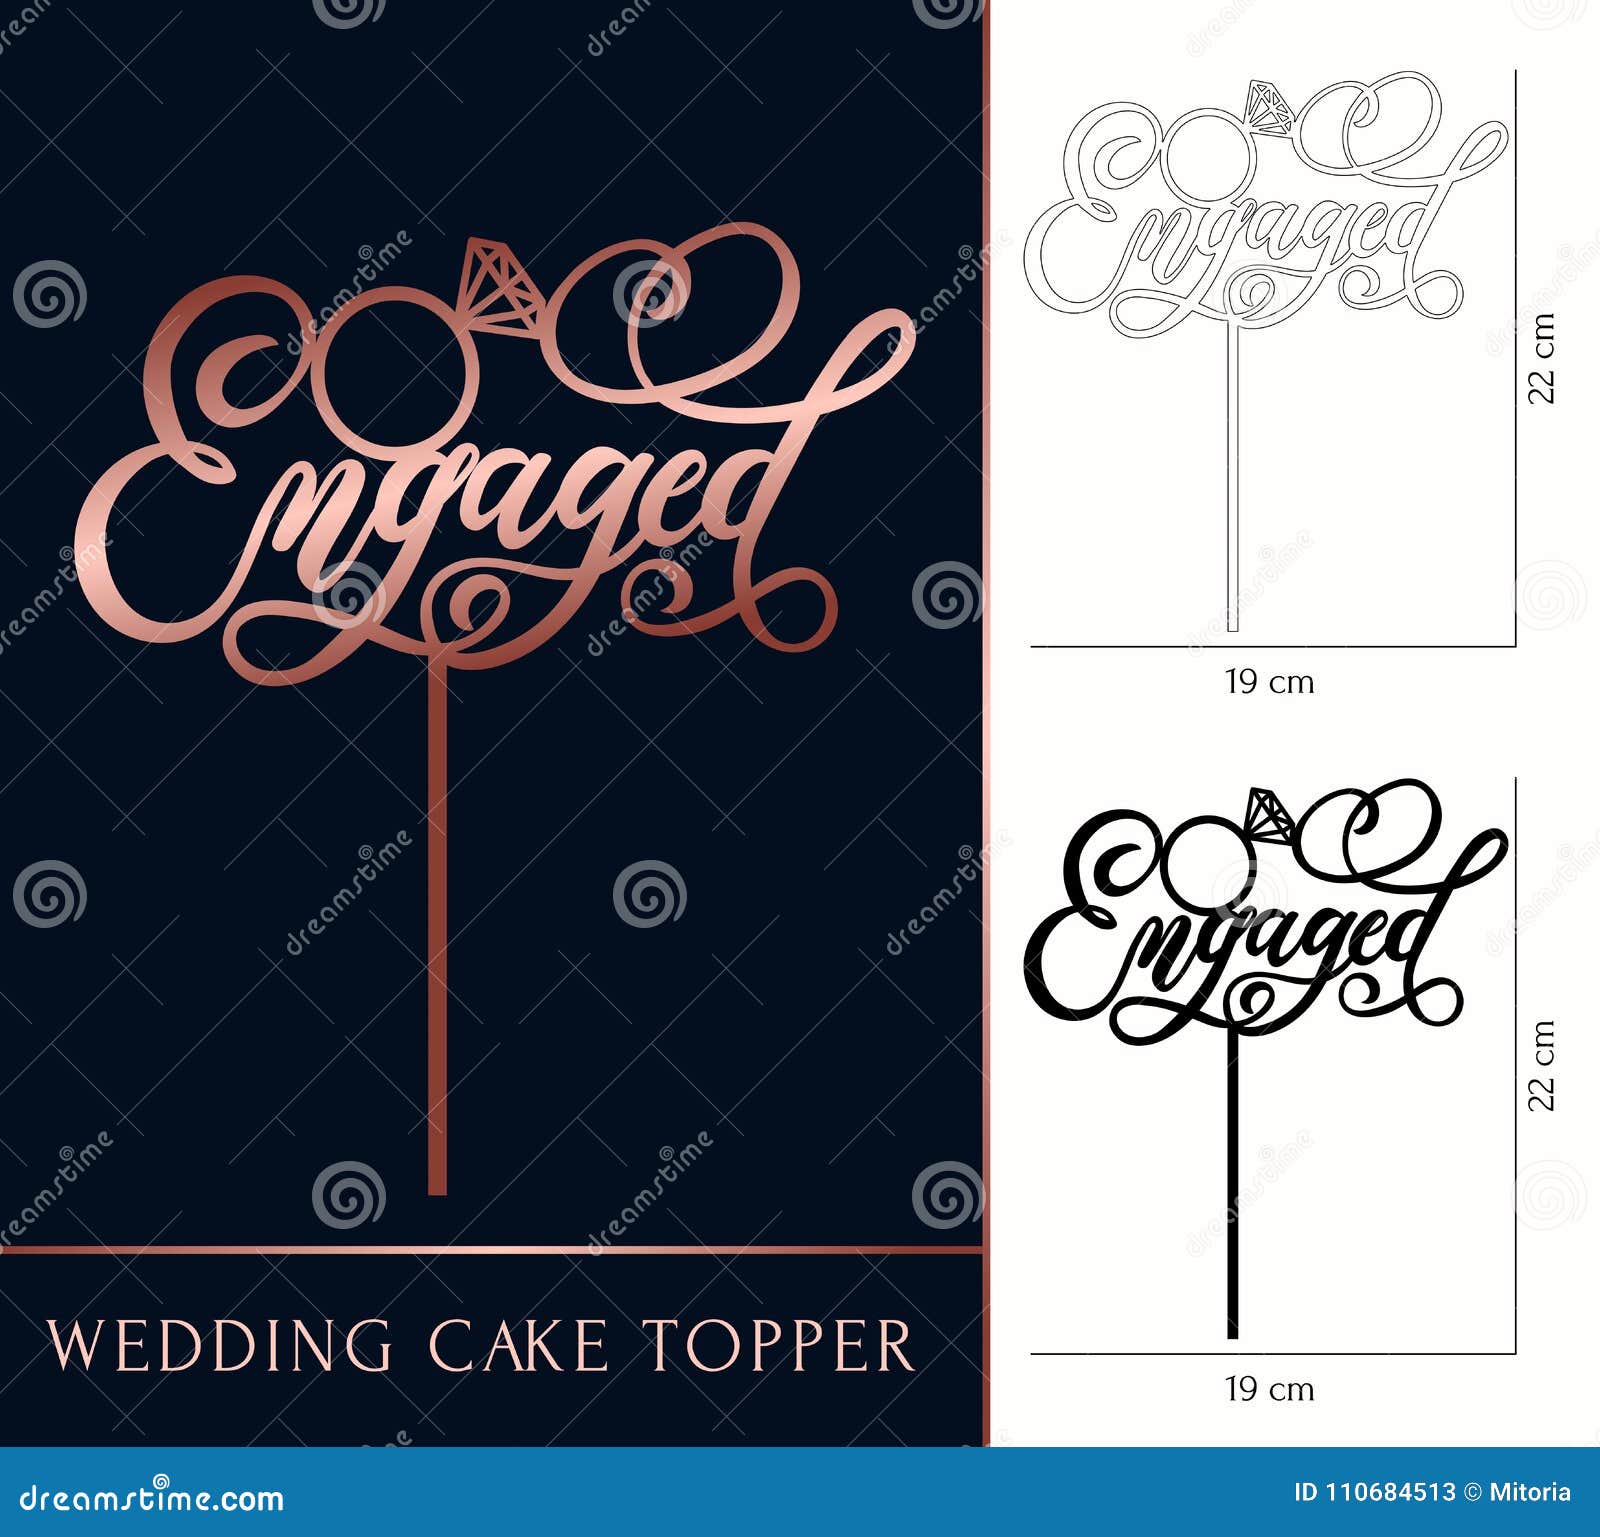 engaged cake topper for laser or milling cut. wedding rose gold